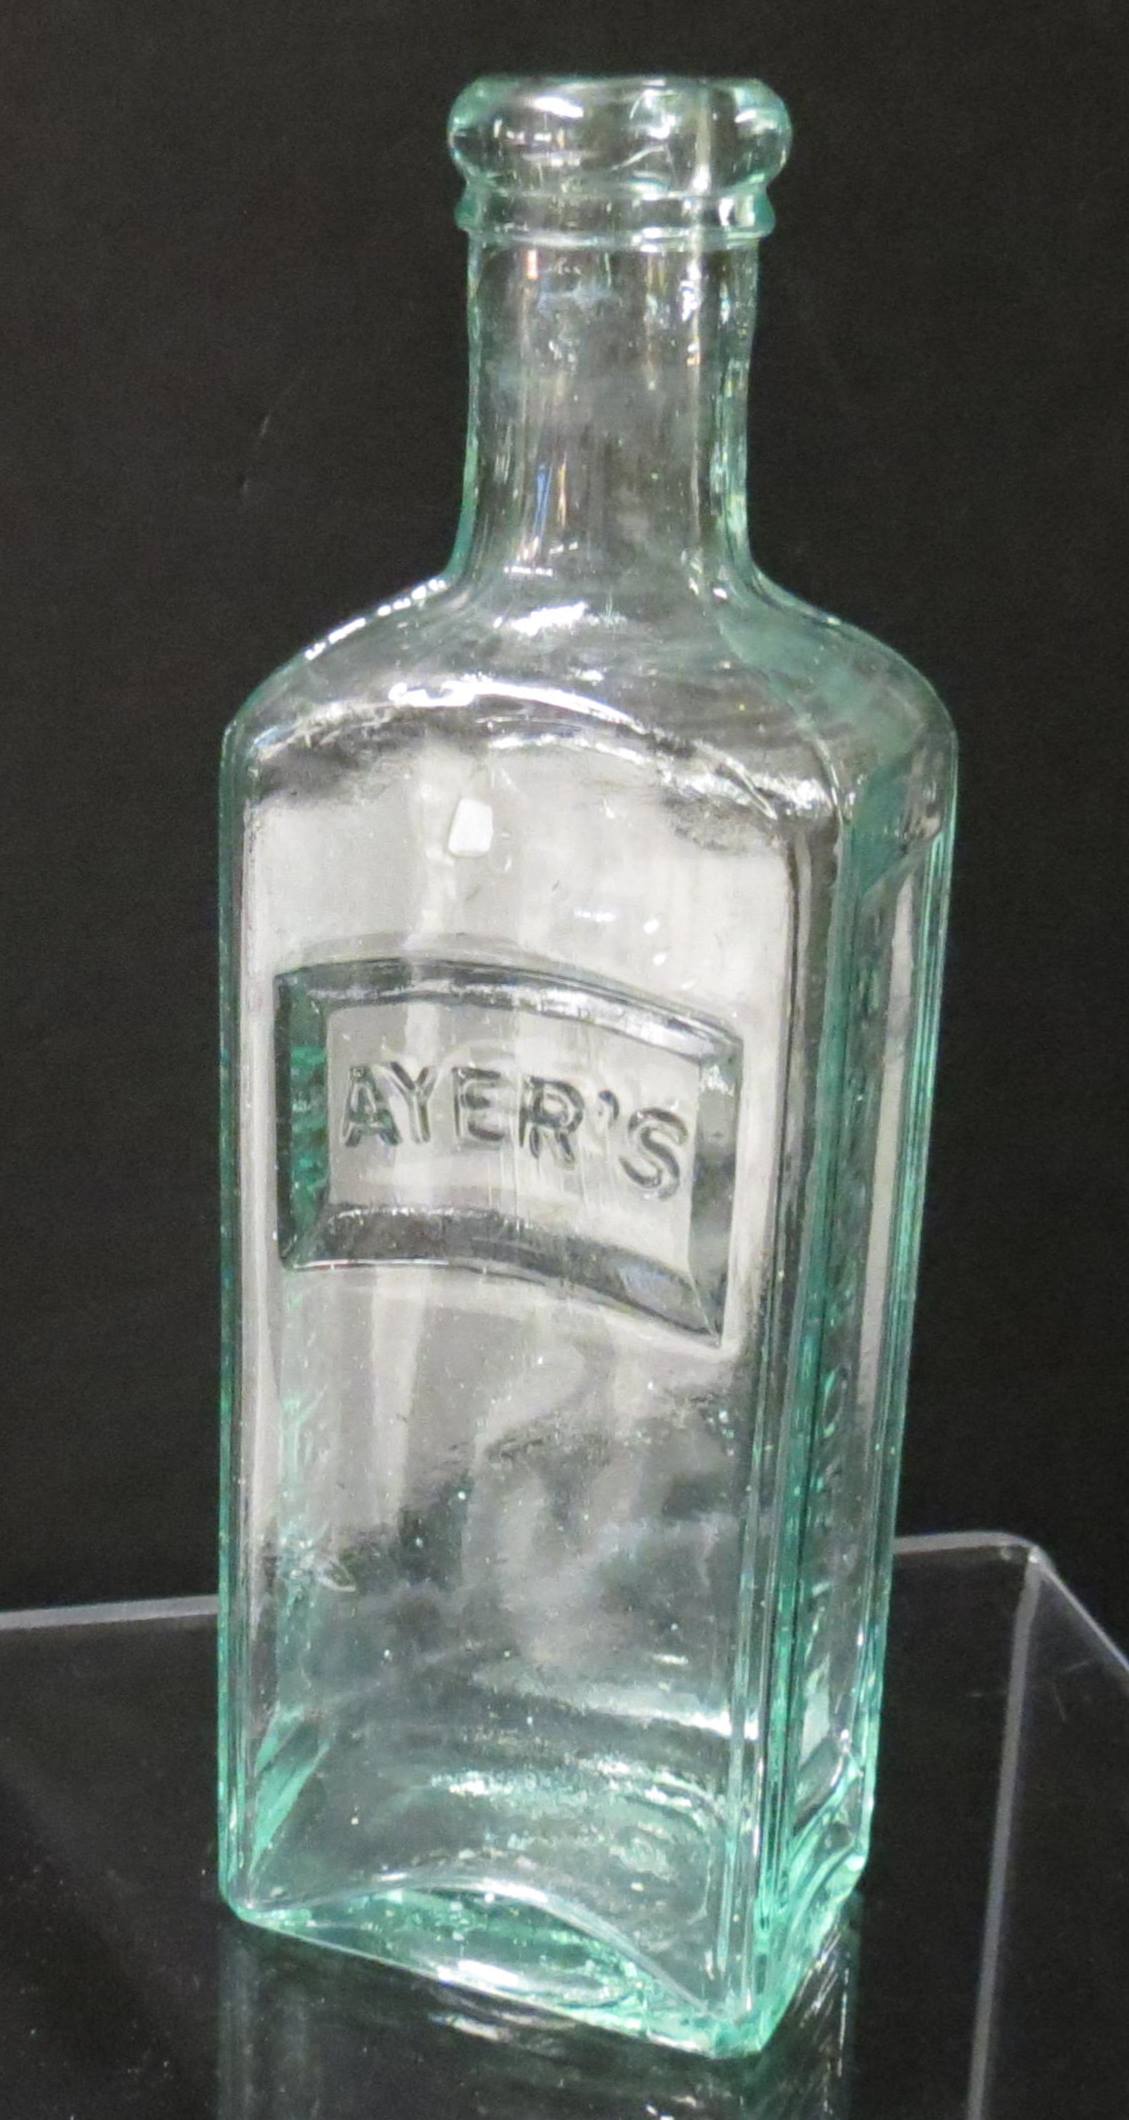 Ayer’s Cherry Pectoral bottle, 1870-1890